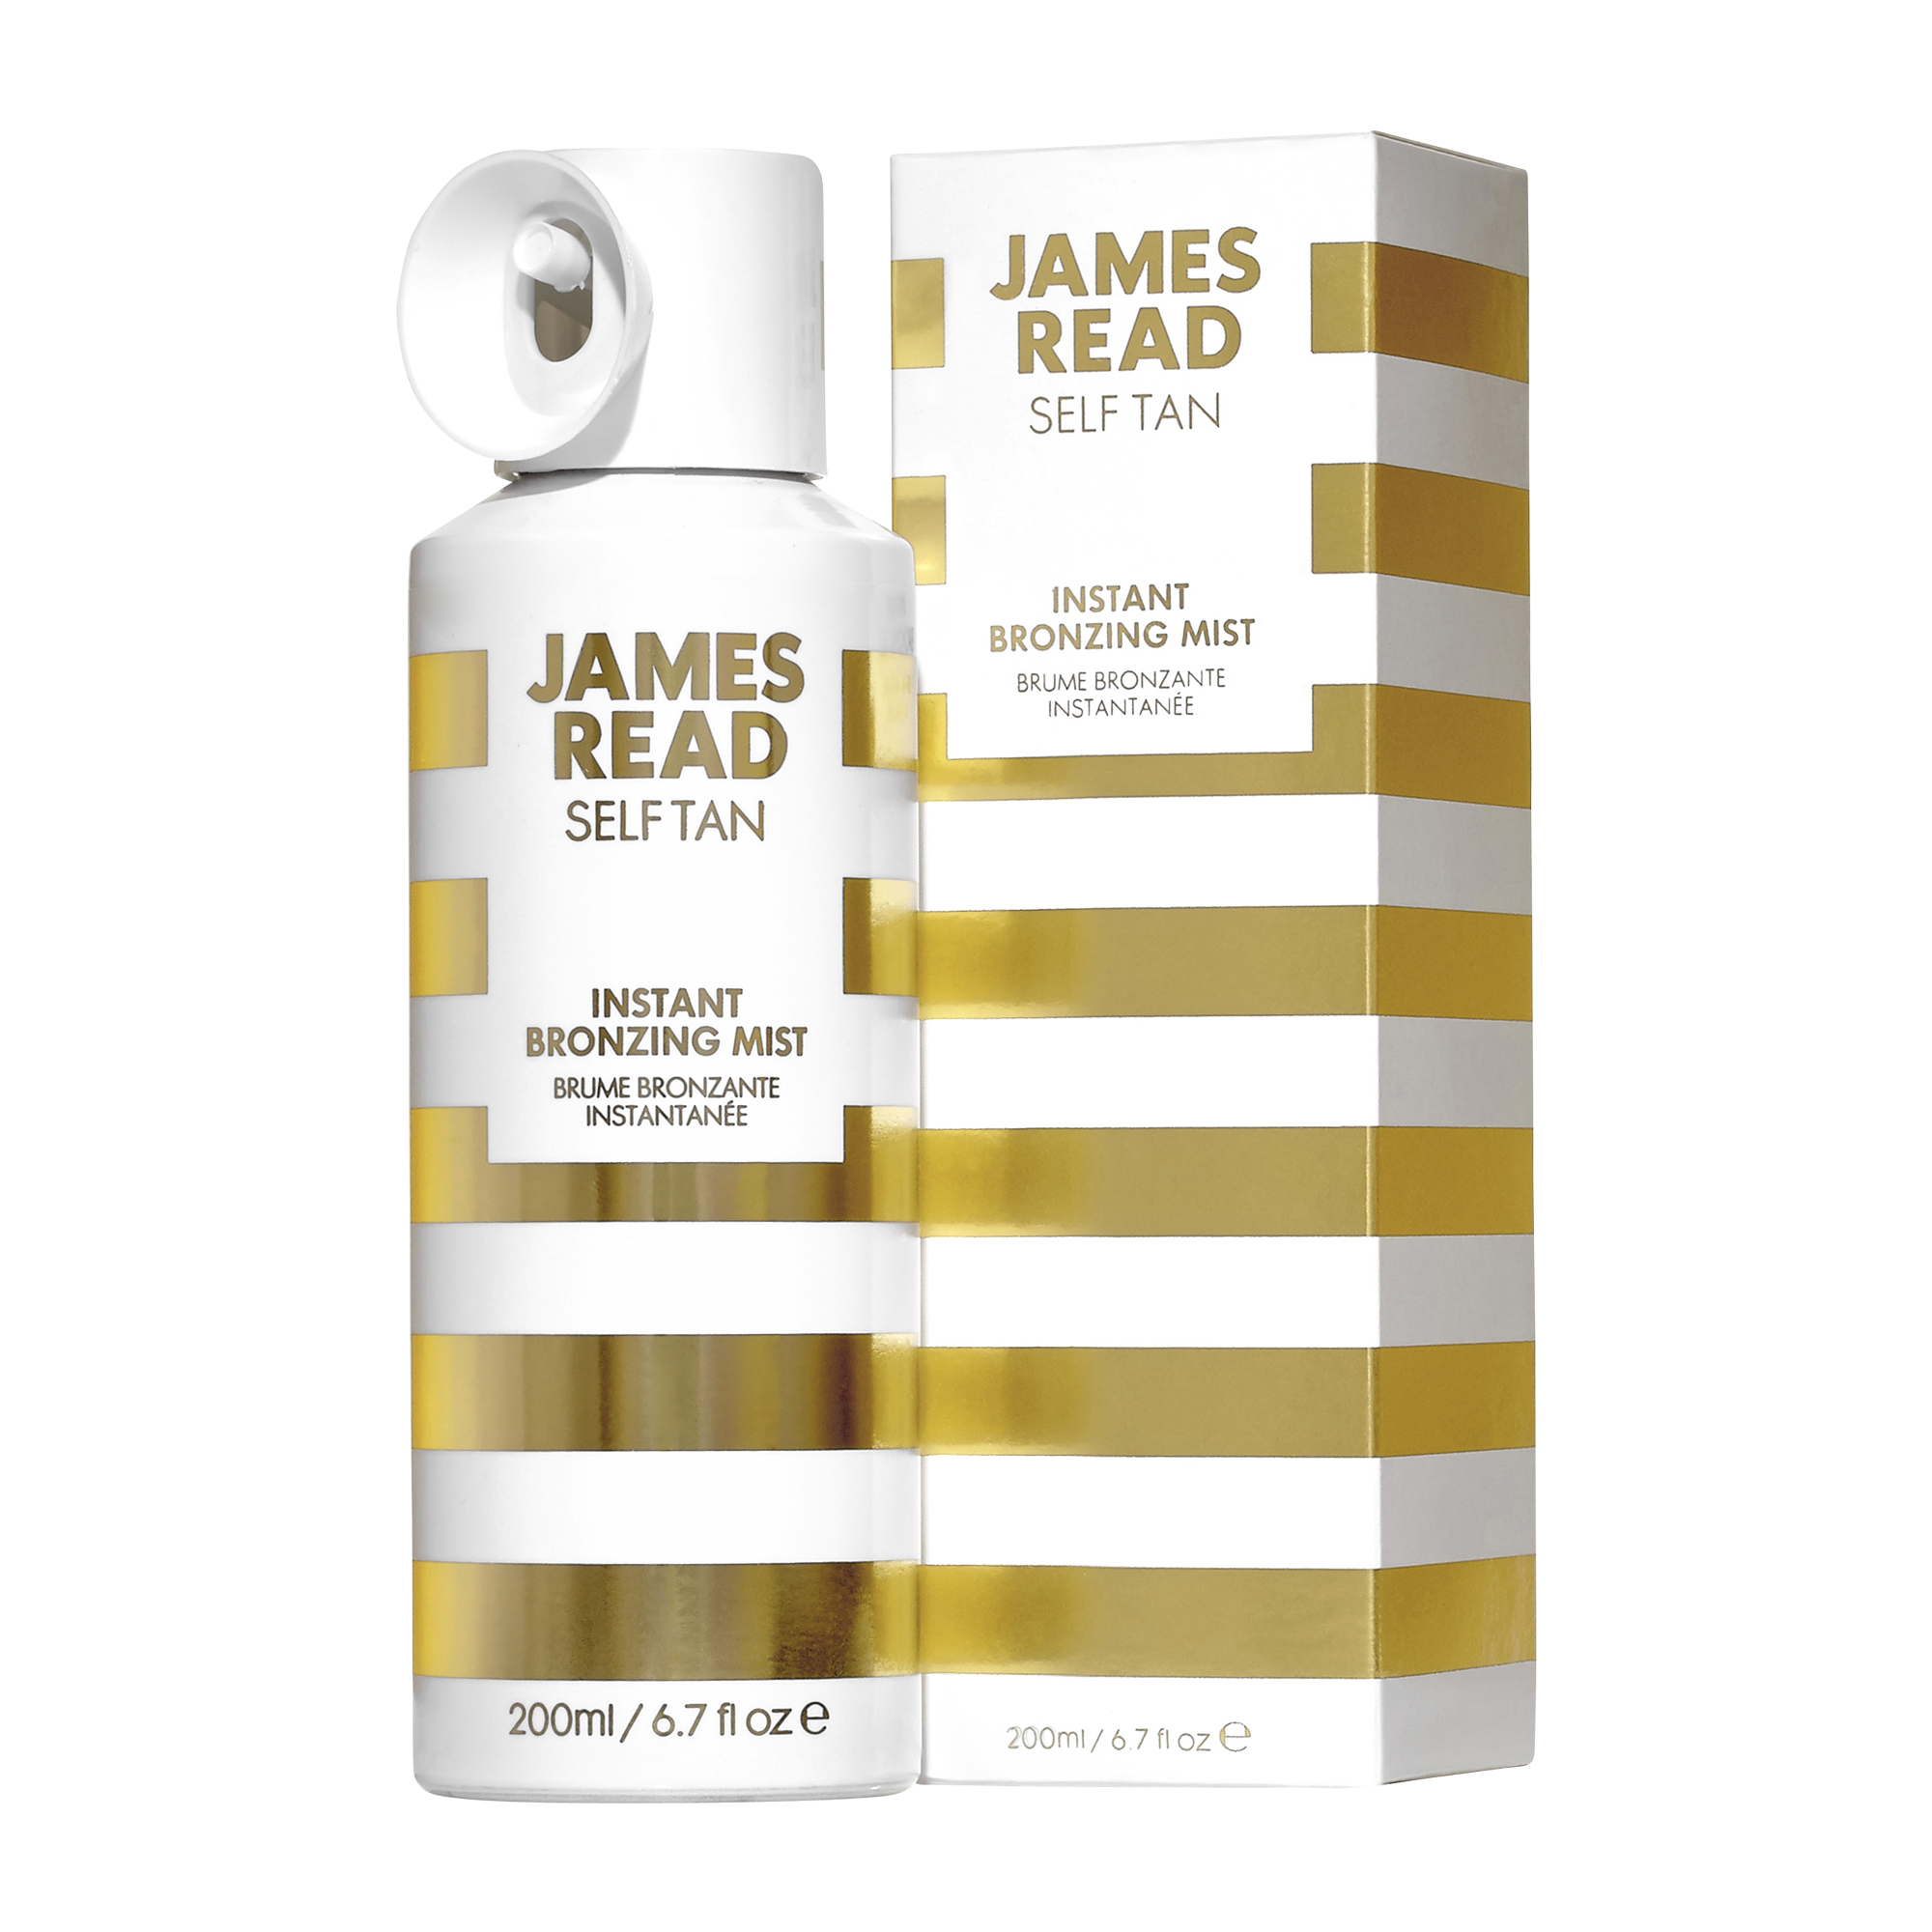 Read jim's. James read автозагар для лица. James read спрей-автозагар для лица и тела instant Bronzing Mist face & body. Спрей для загара James read. James read спрей-автозагар / self tan instant....